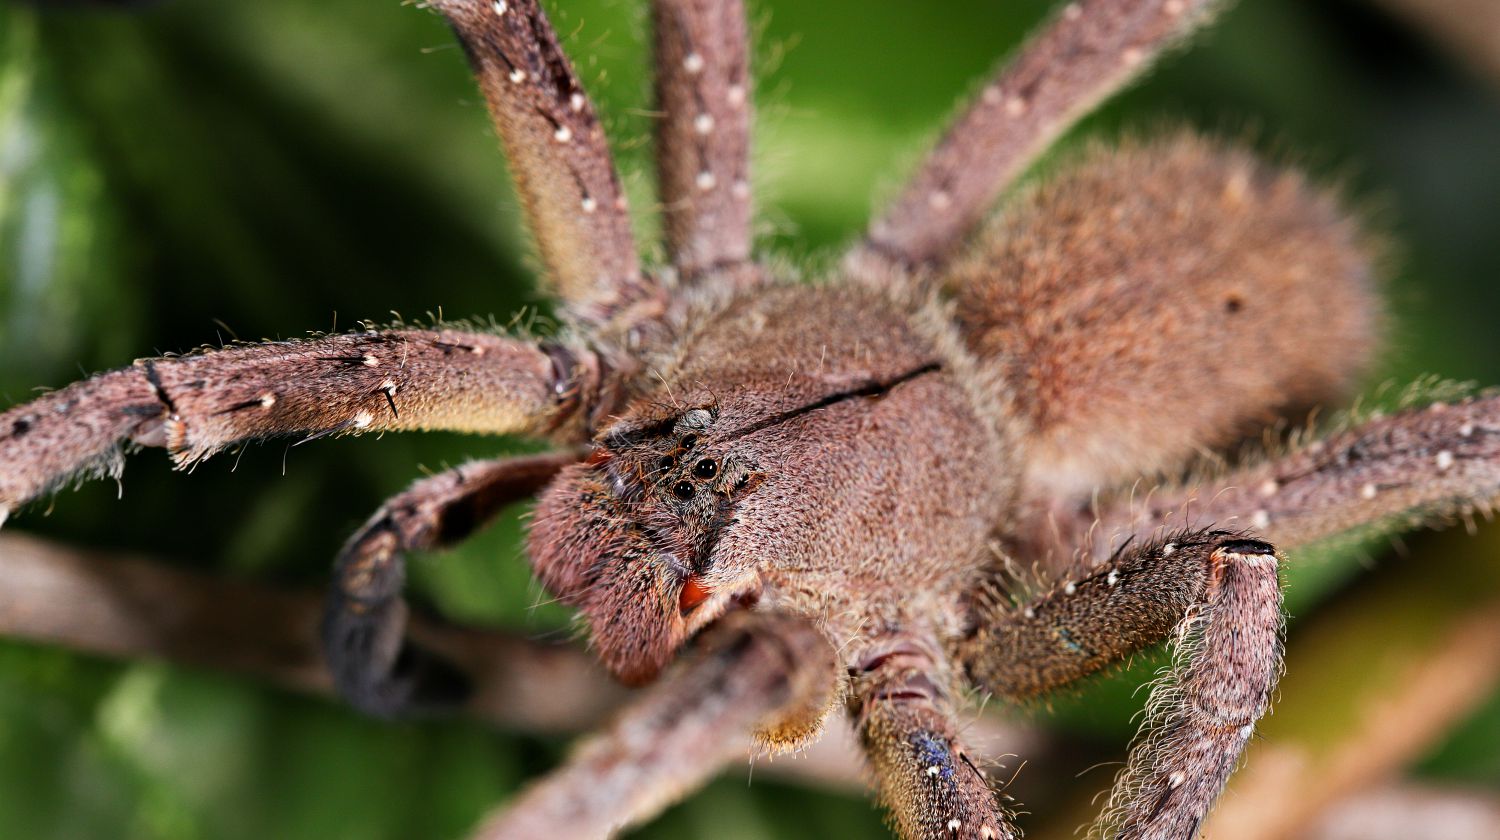 Brazilian wandering spider | Survival Skills | Guide To Venomous Spiders | Featured